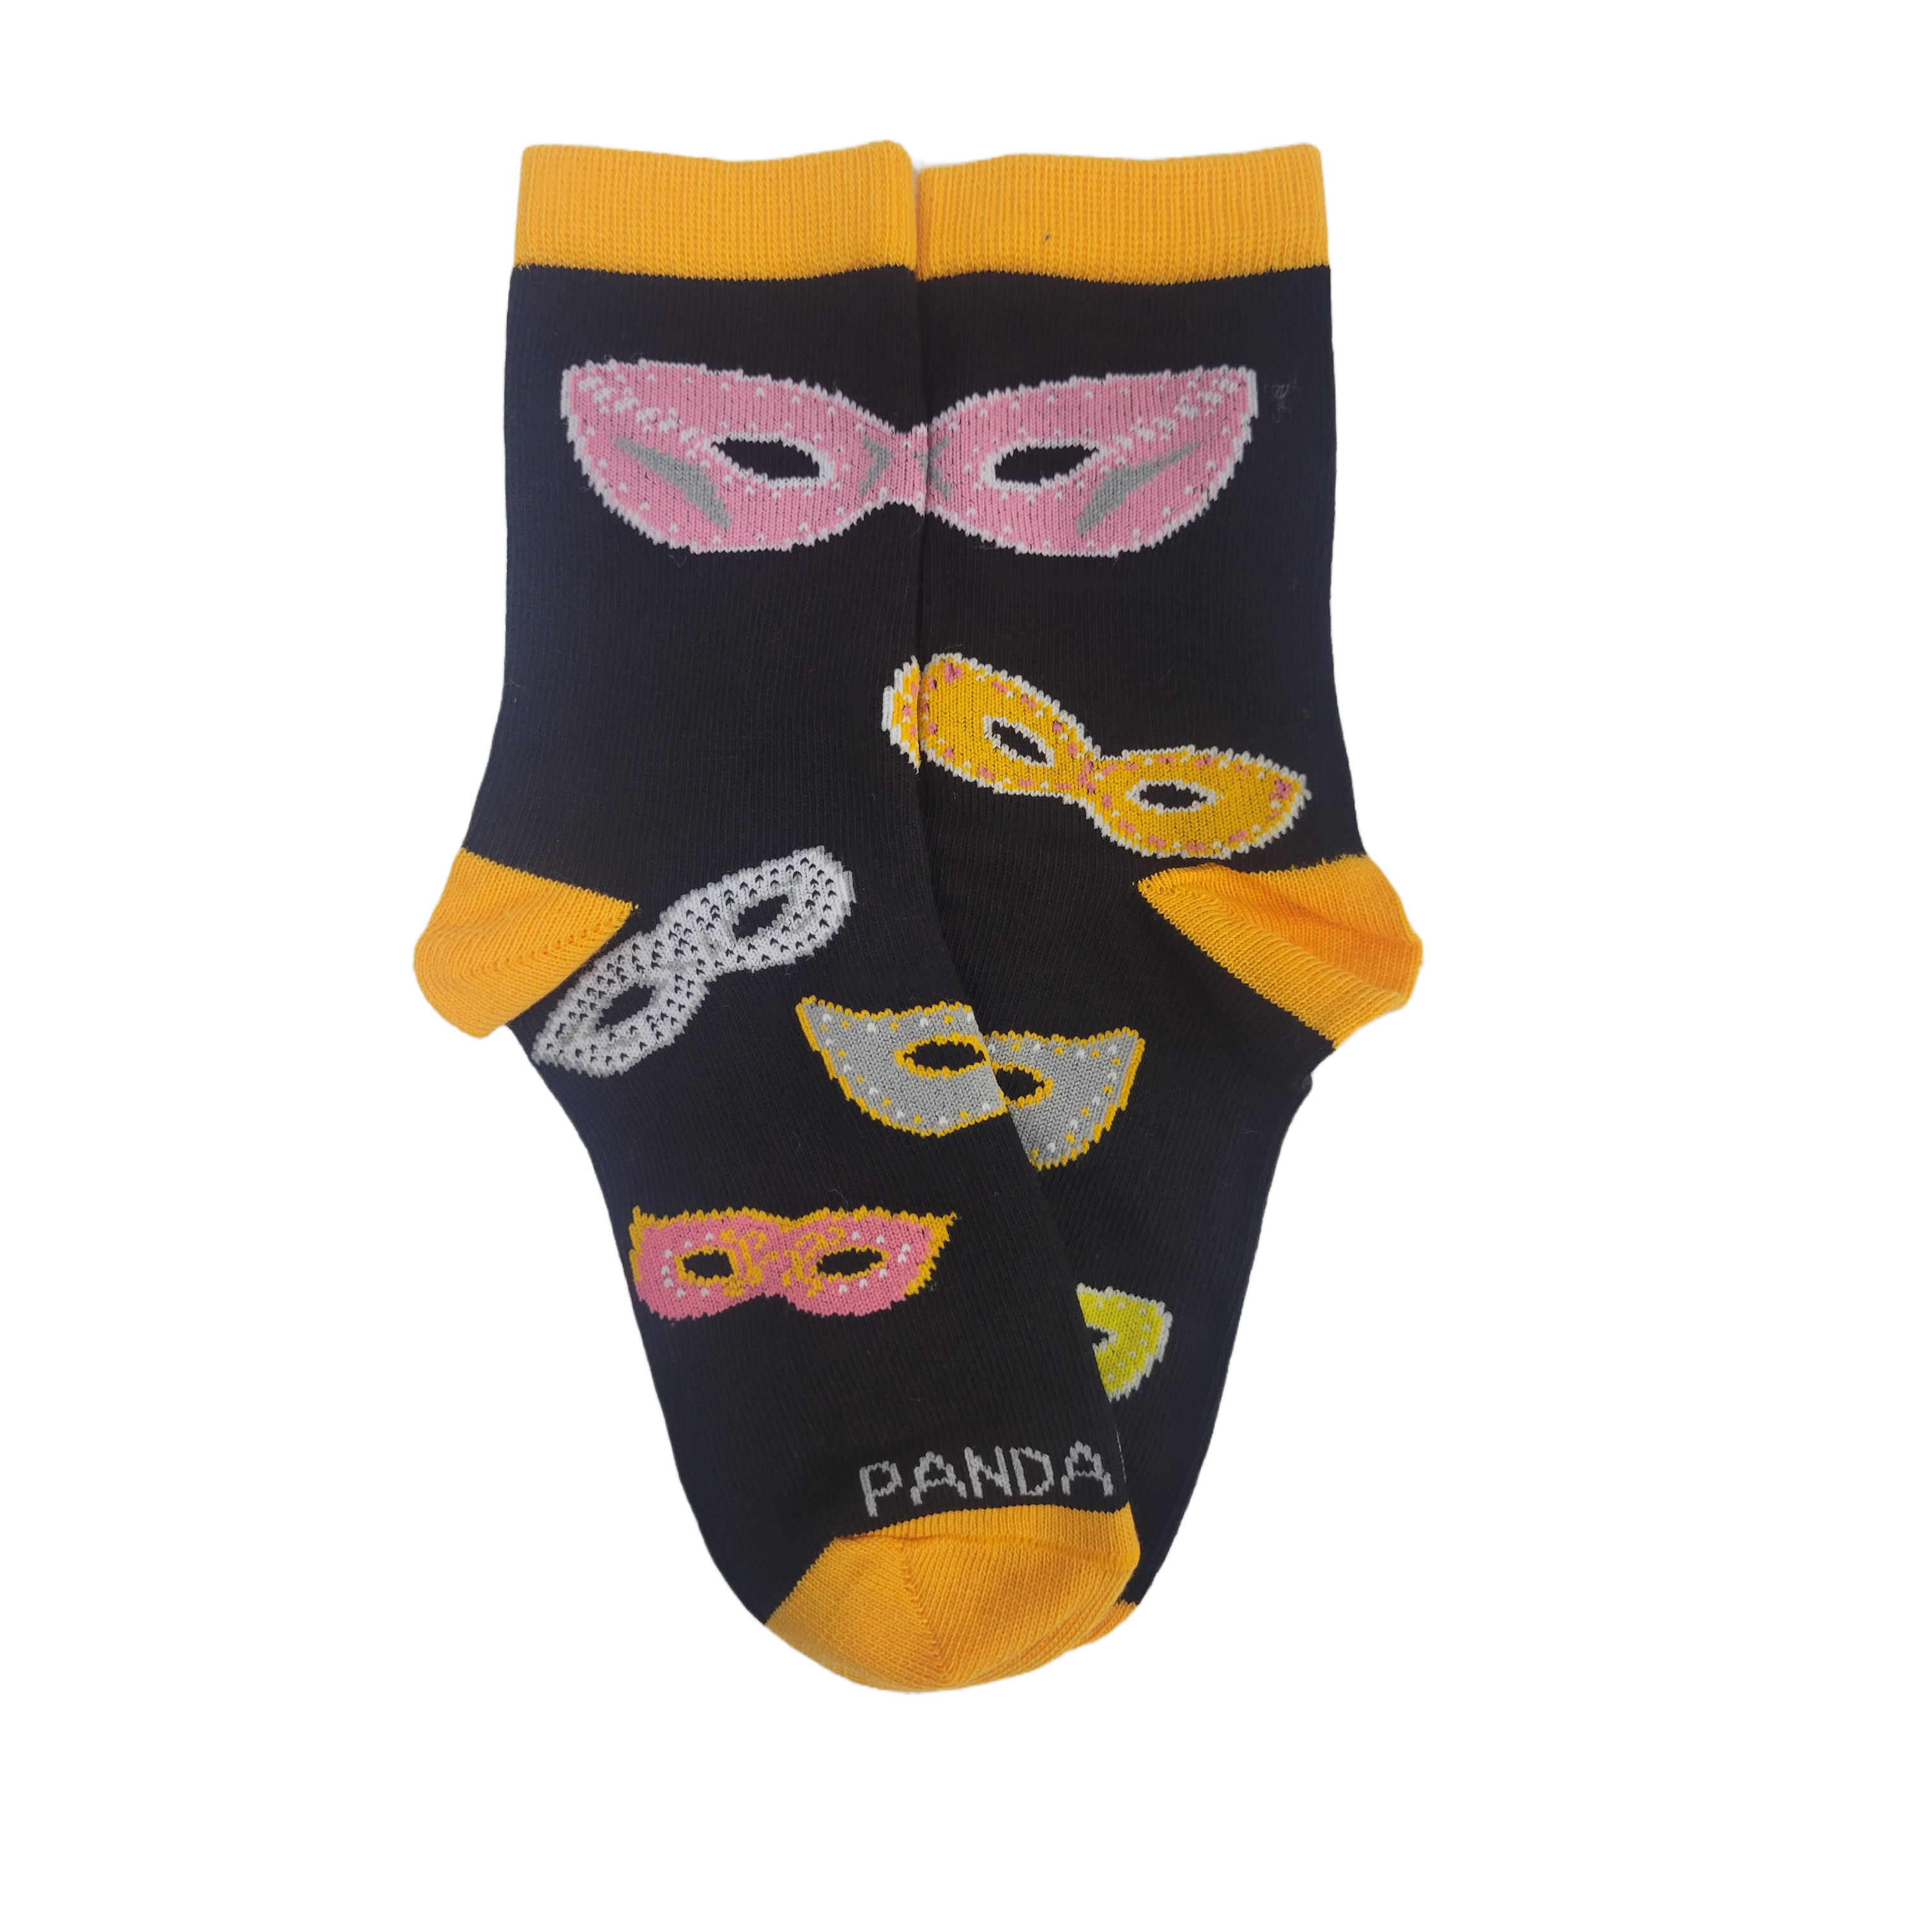 Masquerade Mask Socks with Orange Trim (Ages 3-7)